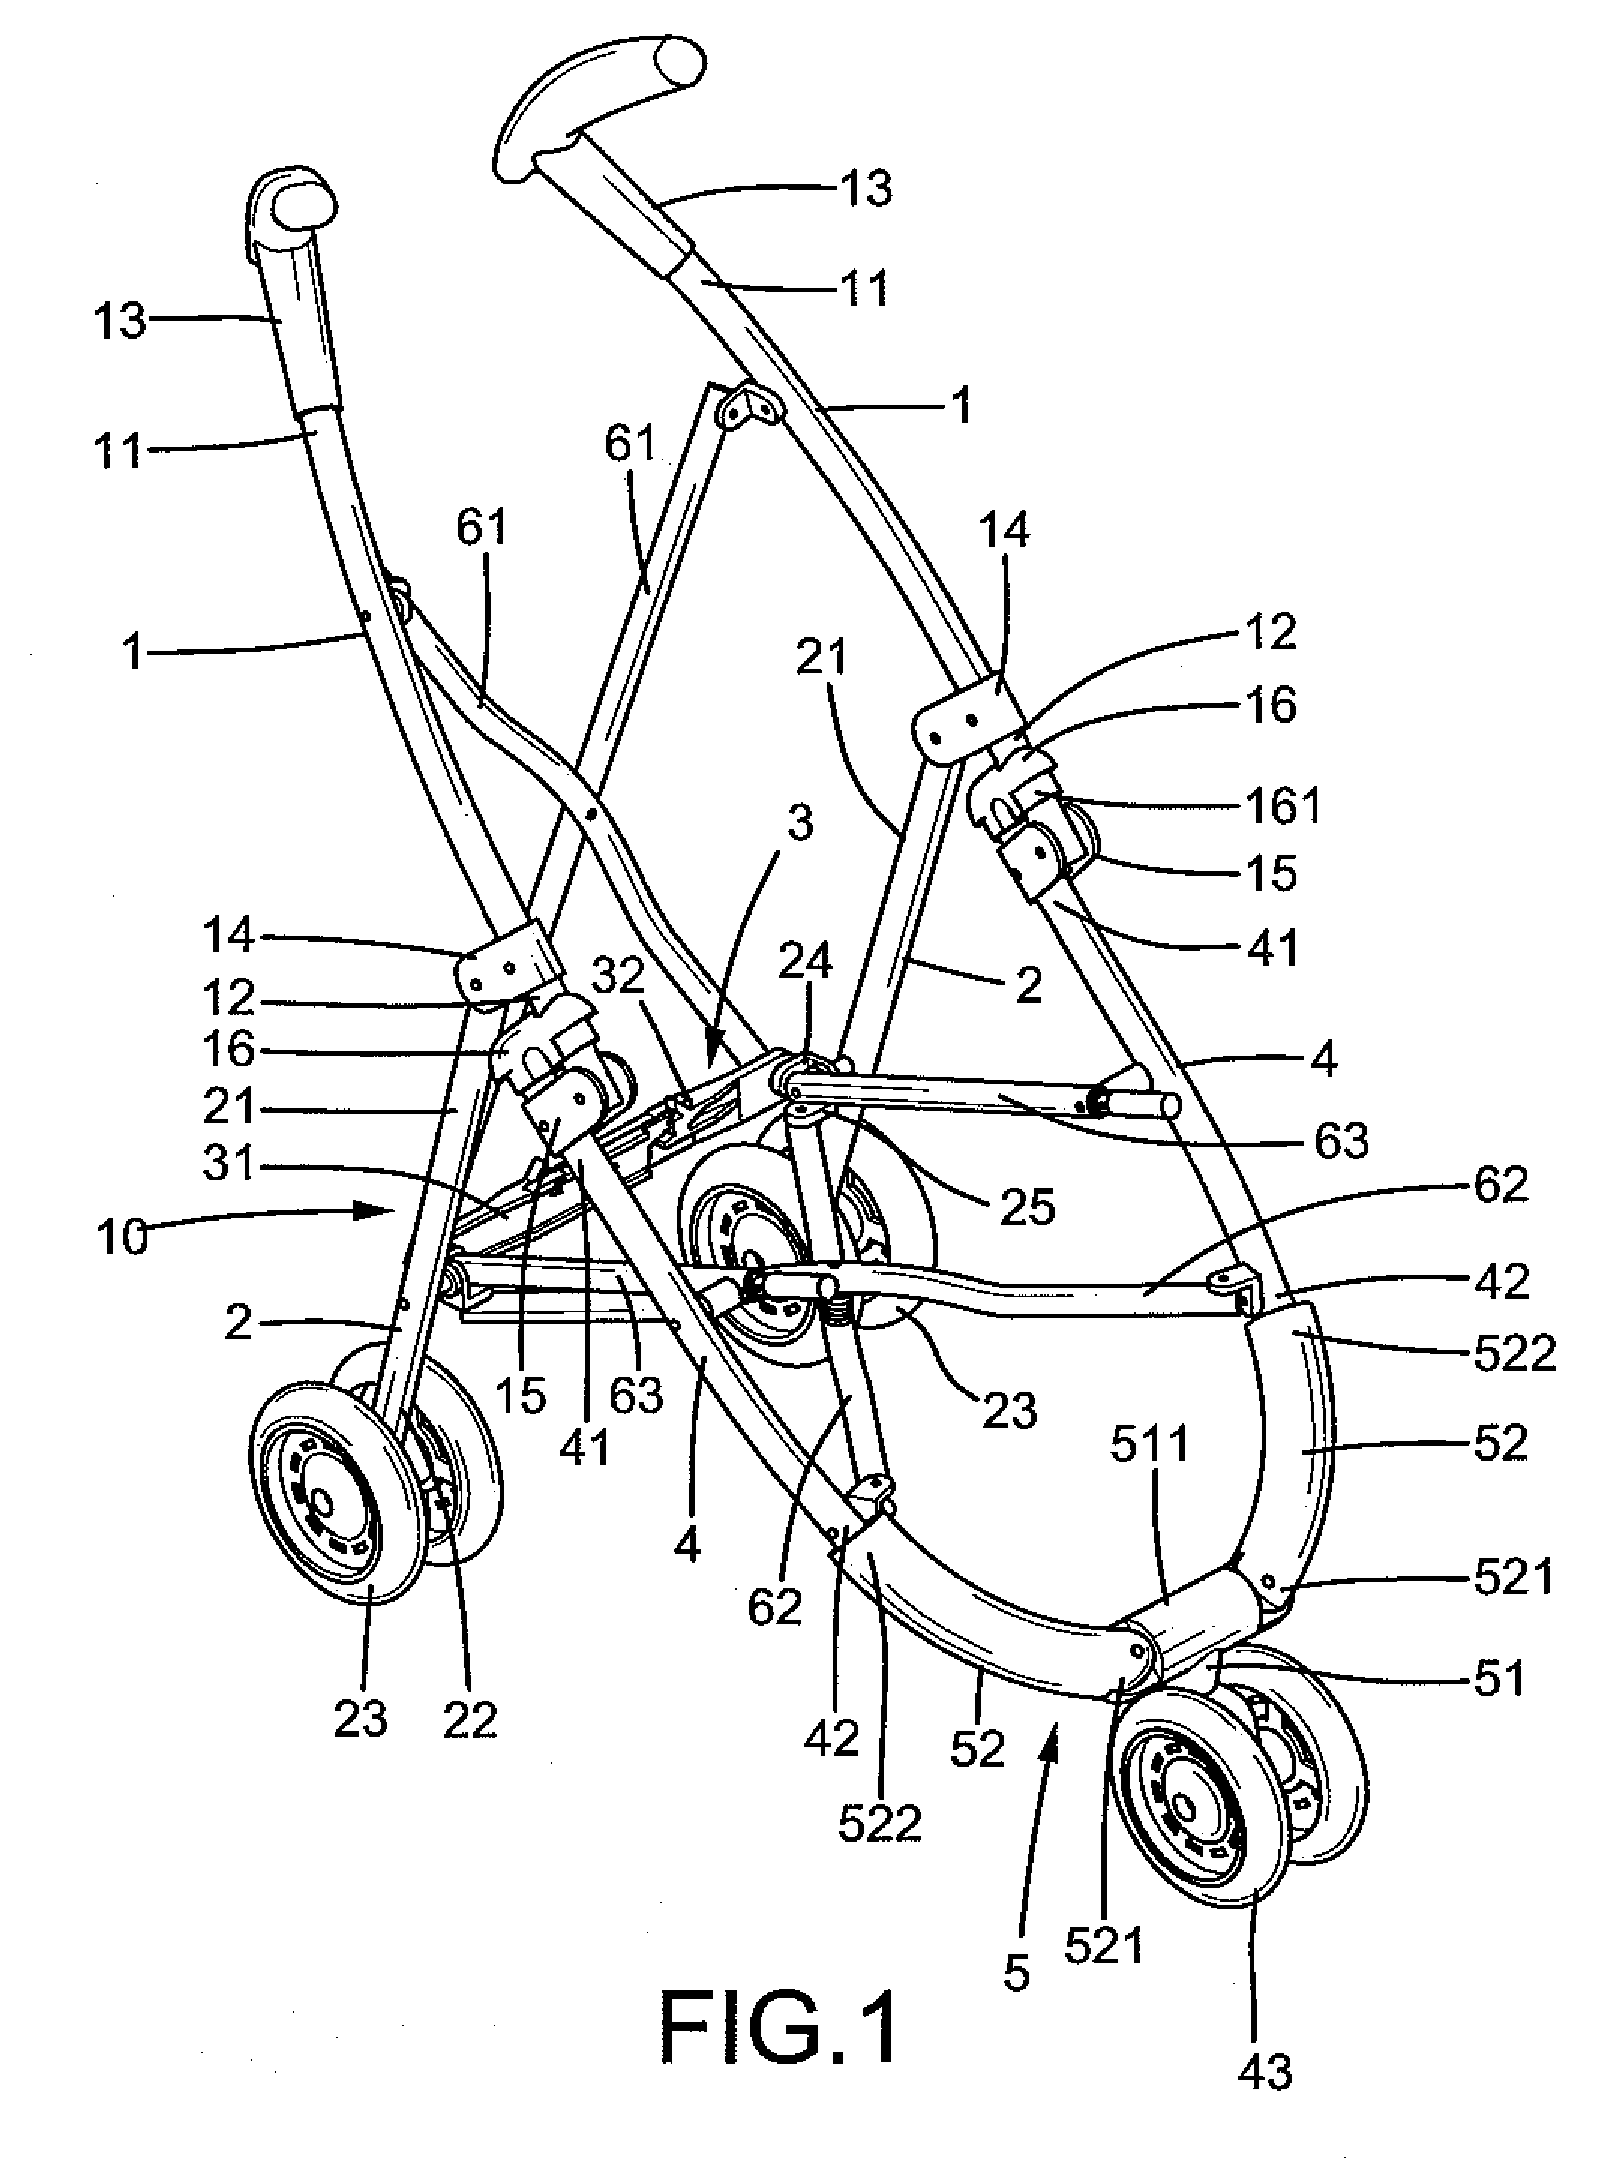 Foldable Three-Wheel Stroller